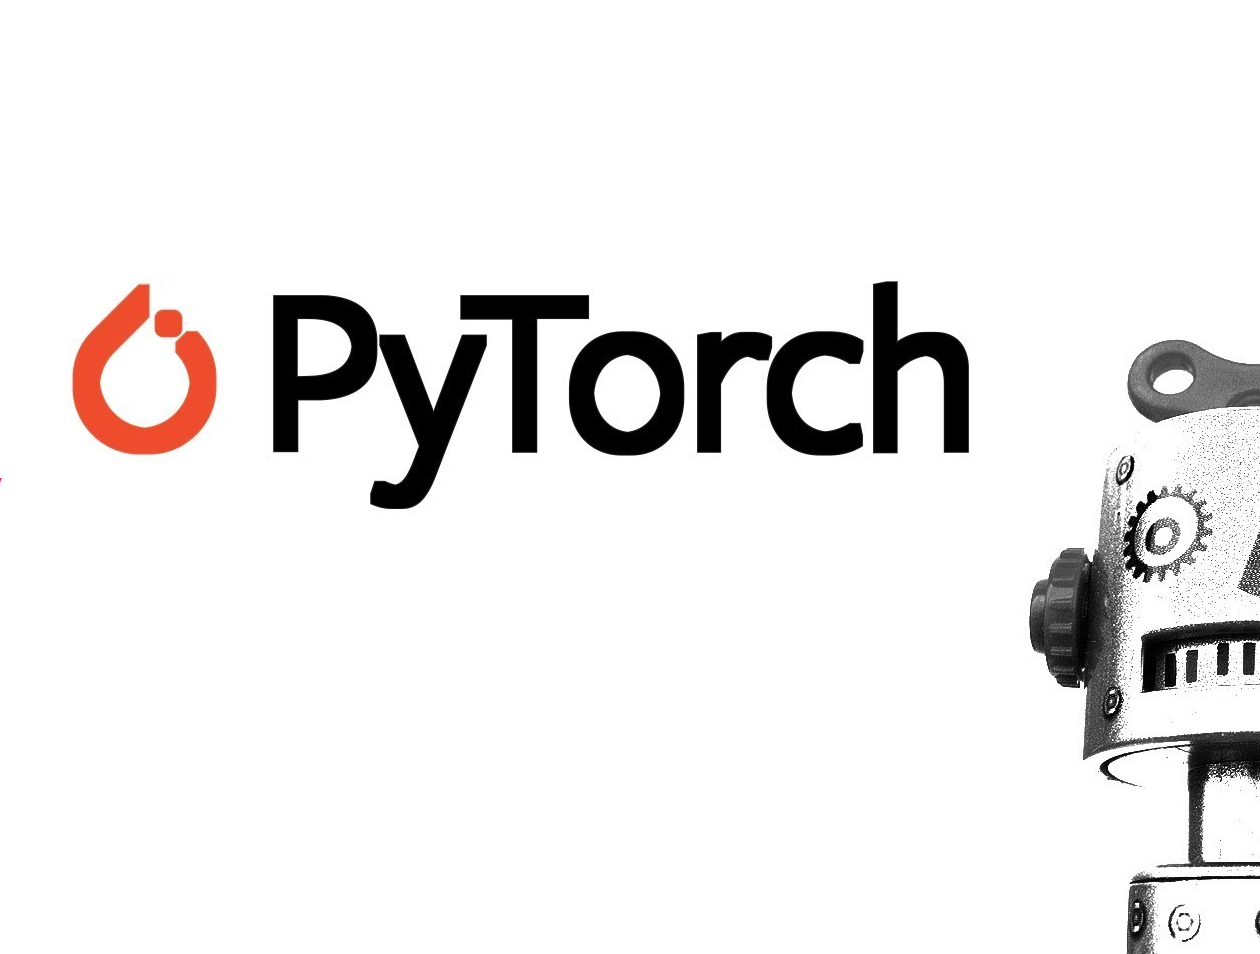 Https pytorch org. PYTORCH. PYTORCH лого. PYTORCH. Deep Learning. PYTORCH icon.